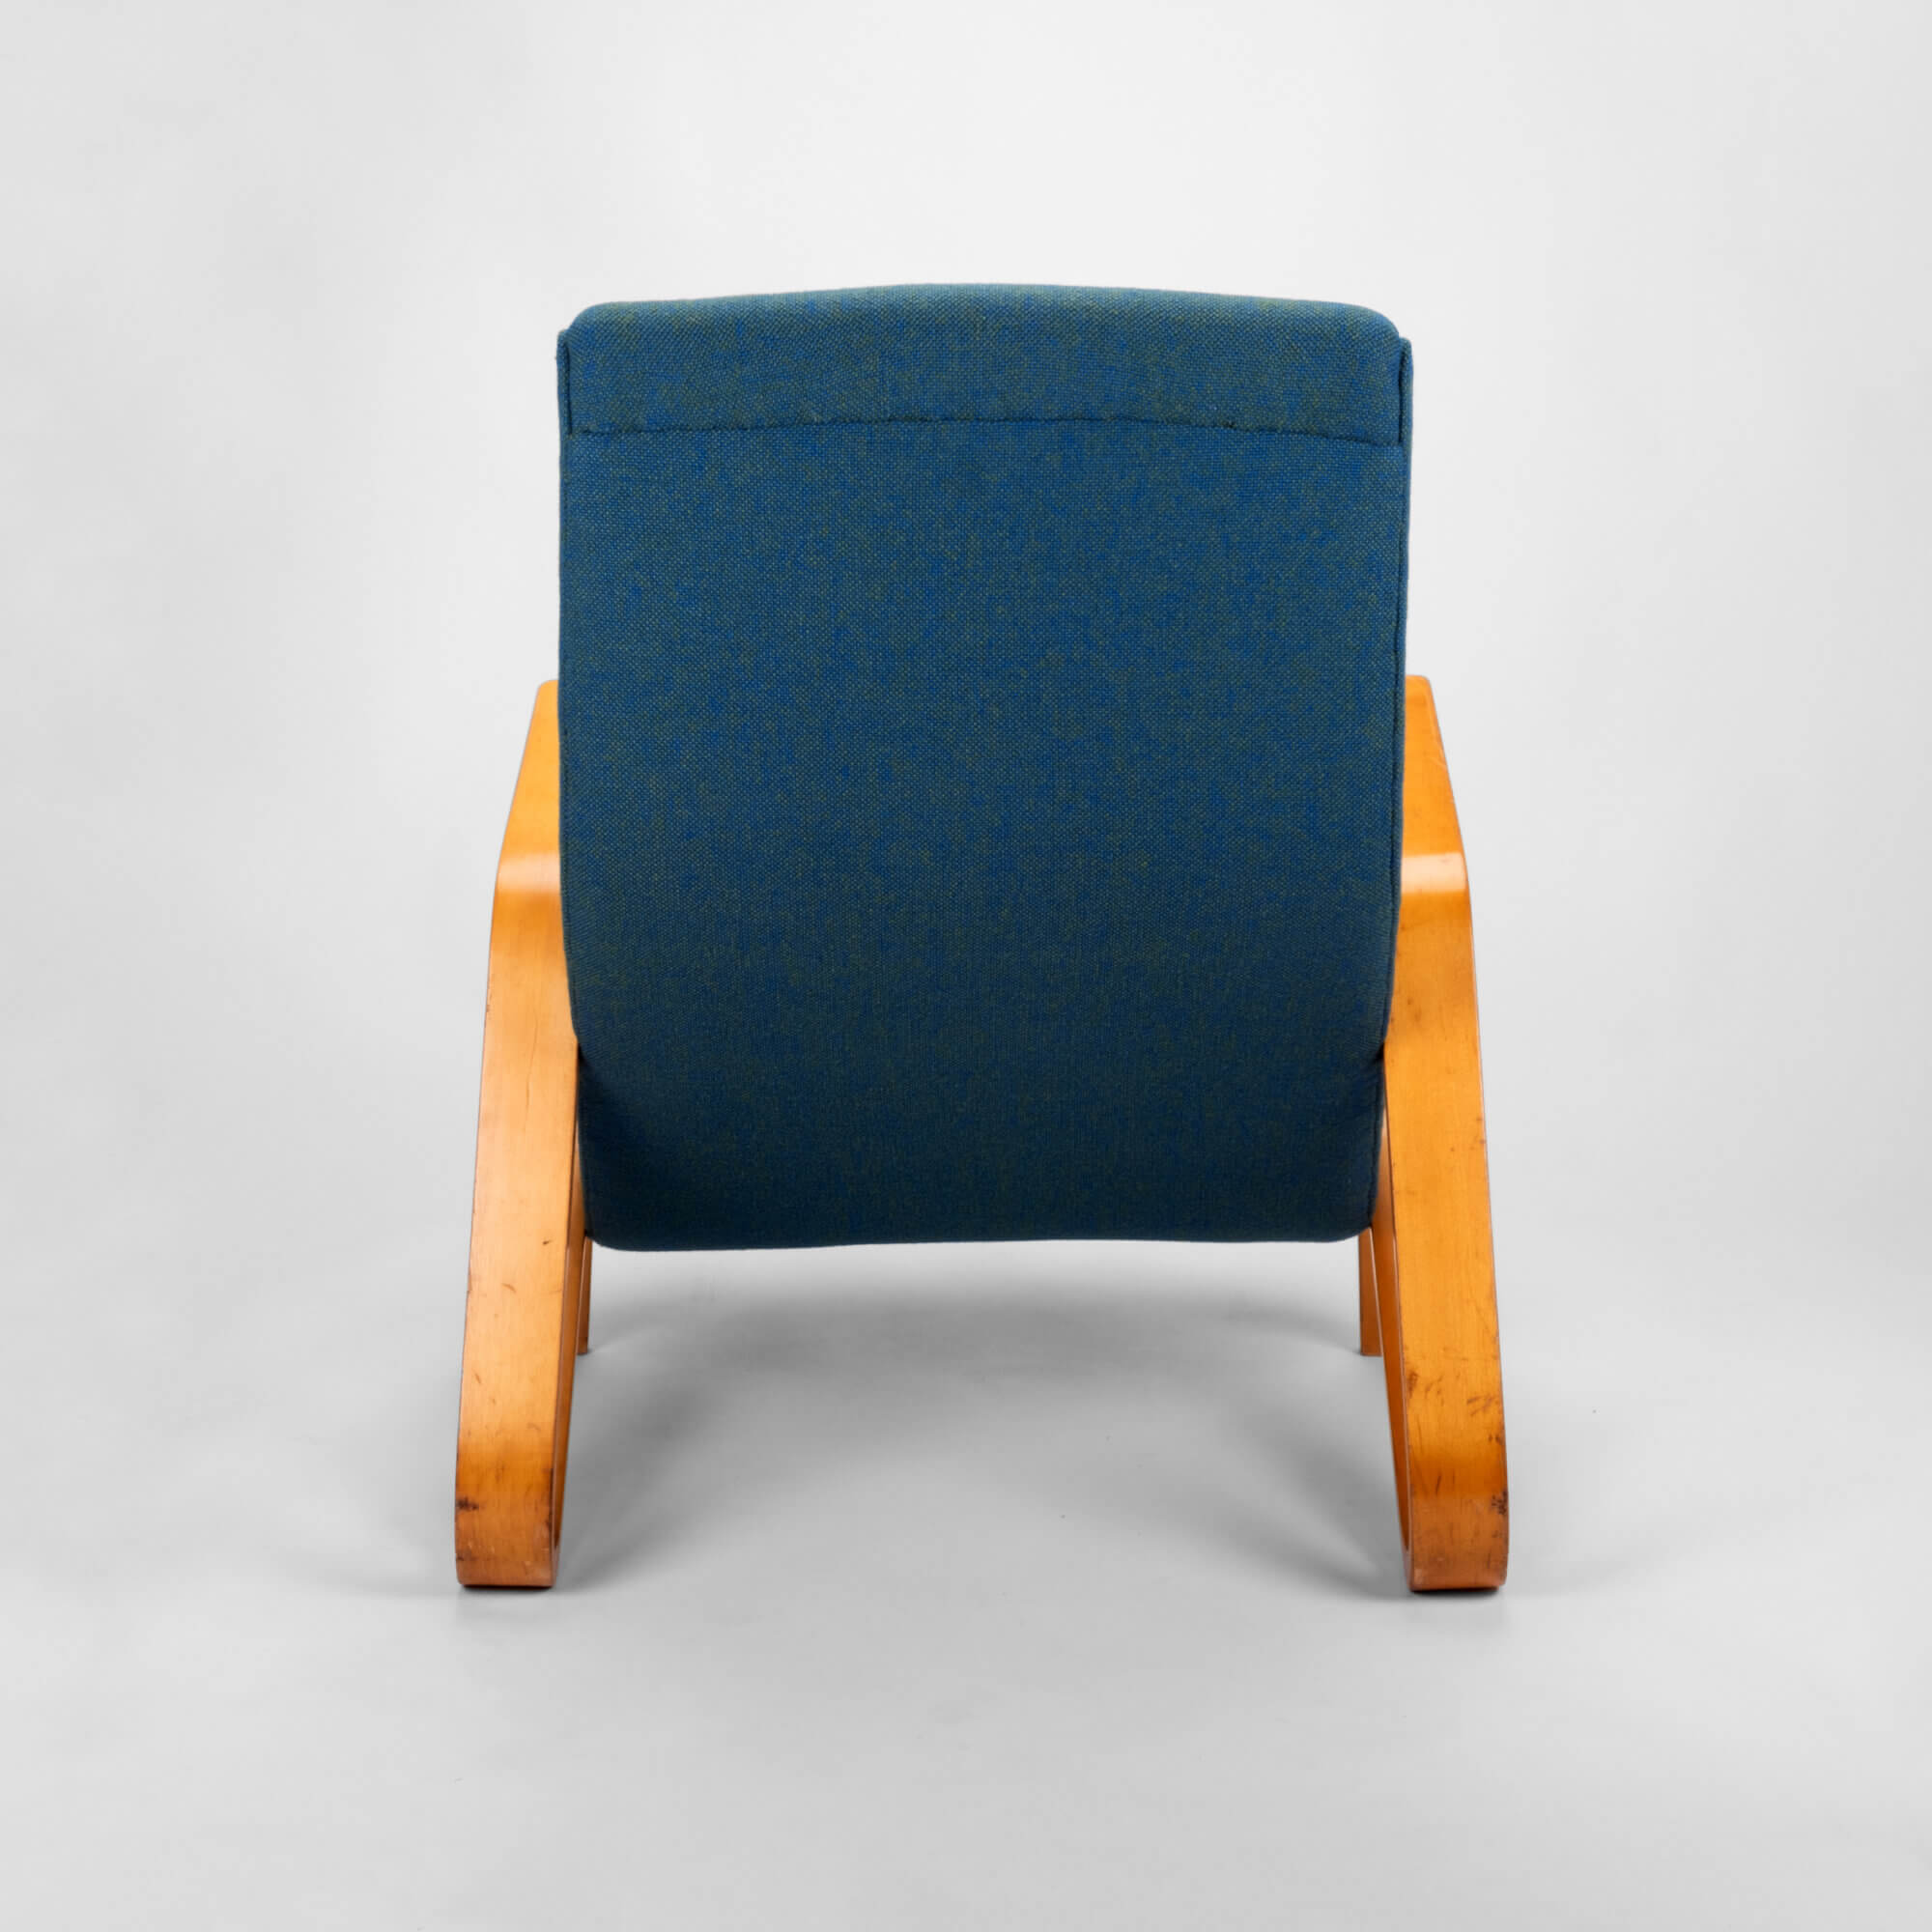 Eero Saarinen Grasshopper lounge chair shown from the back